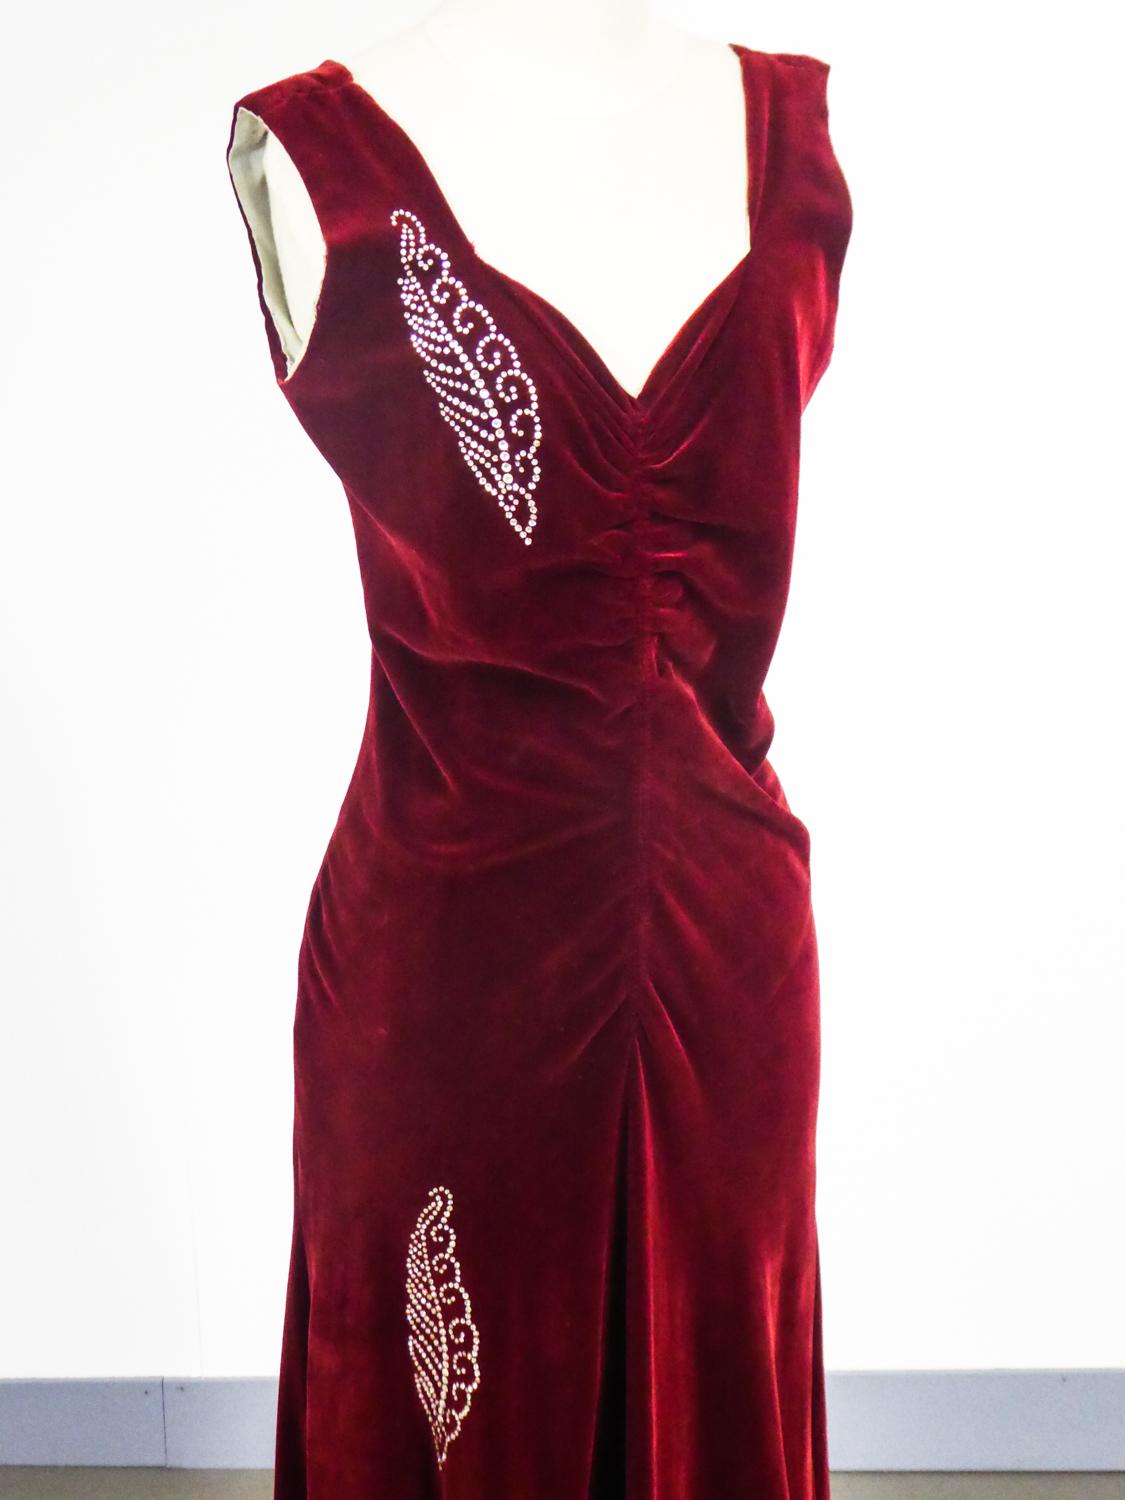 A Nicole Groult / Paul Poiret Evening Dress in Velvet and Rhinestones Circa 1935 For Sale 2